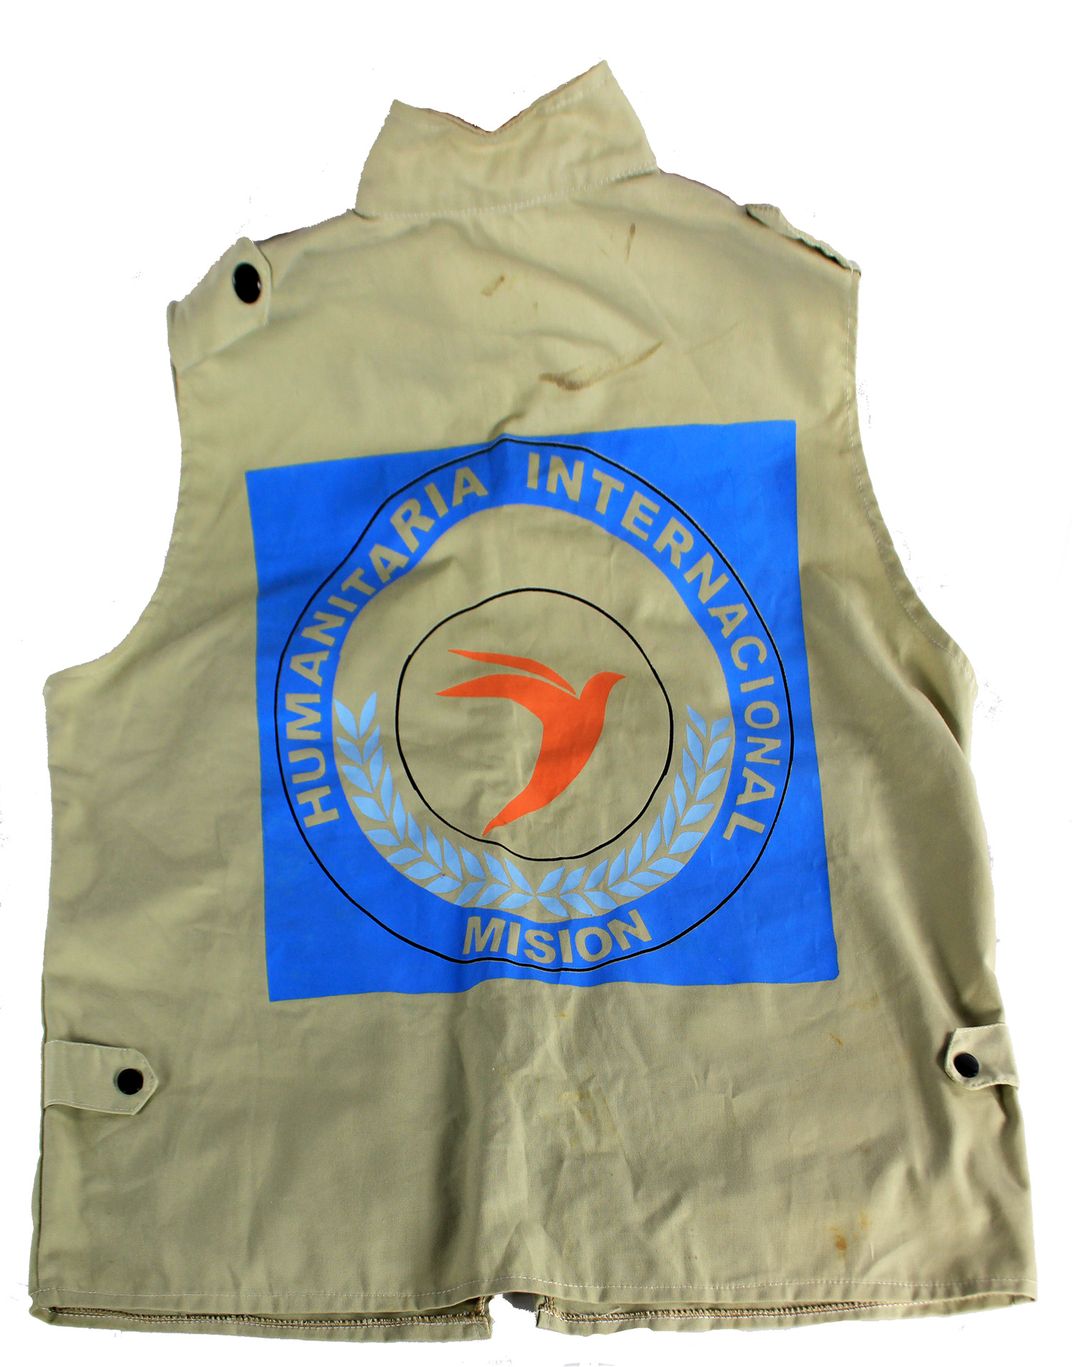 International Humanitarian Mission Vest